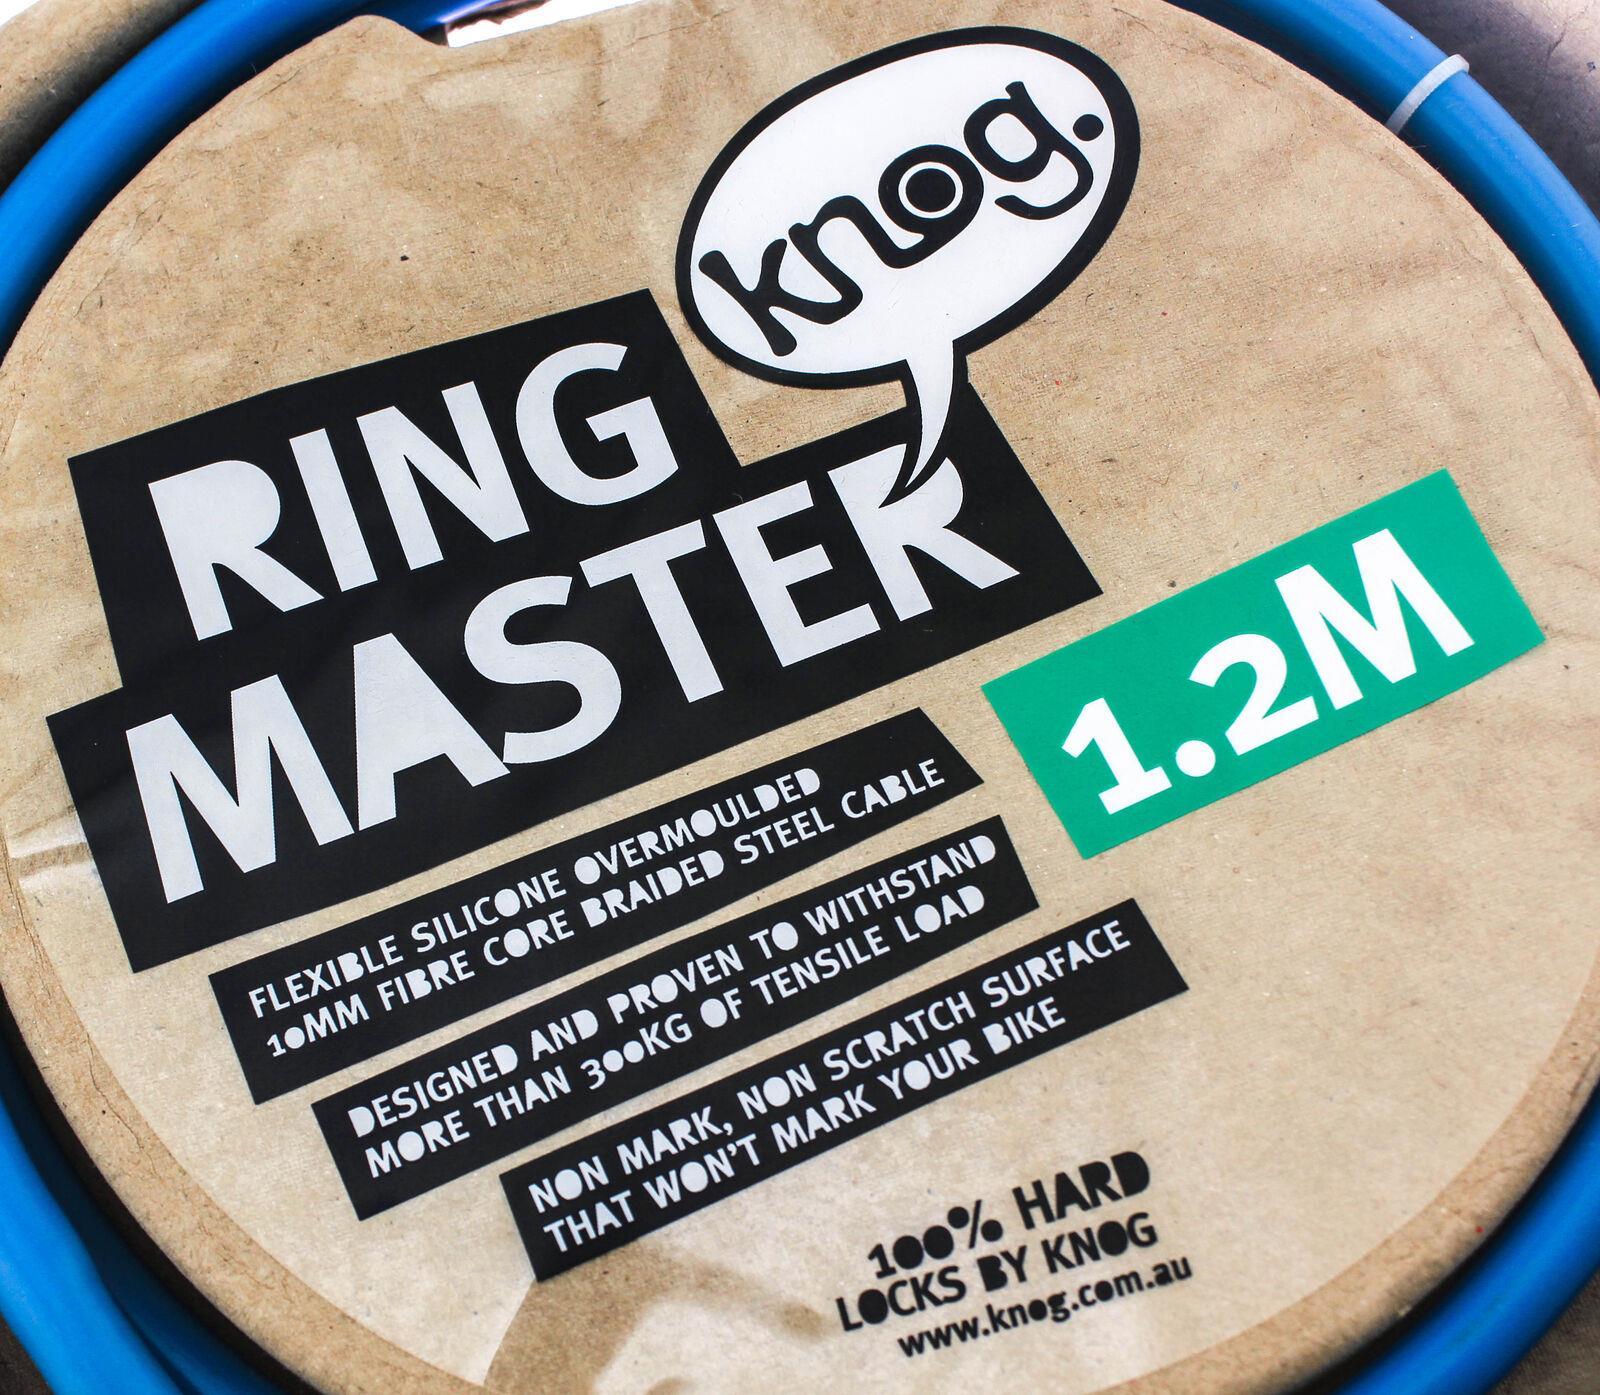 Knog Ring Master 1.2m Bike Cable Bike Silicone Over-Moulded Blue 10mm Steel NEW - Random Bike Parts